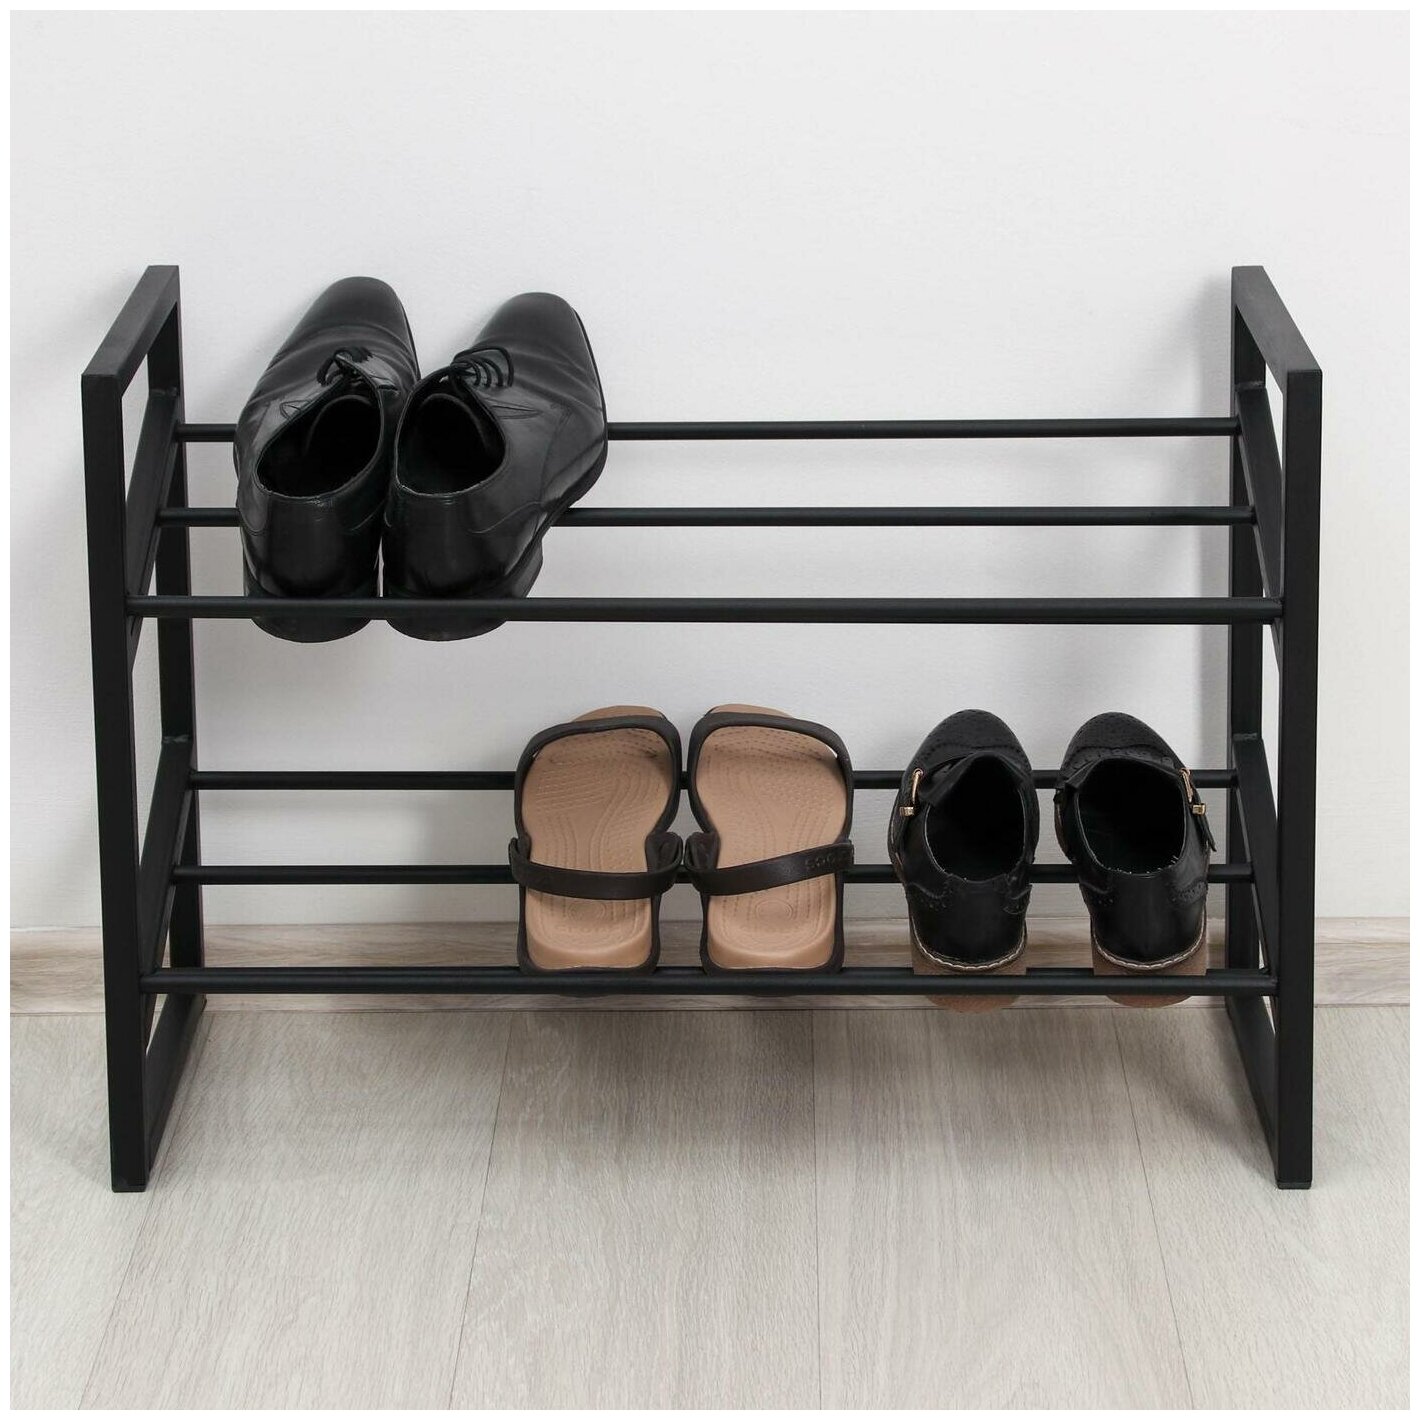 Полка для обуви "Авангард", 2 яруса, 70,5х30,5х50,5 см, цвет чёрный (1 шт.)